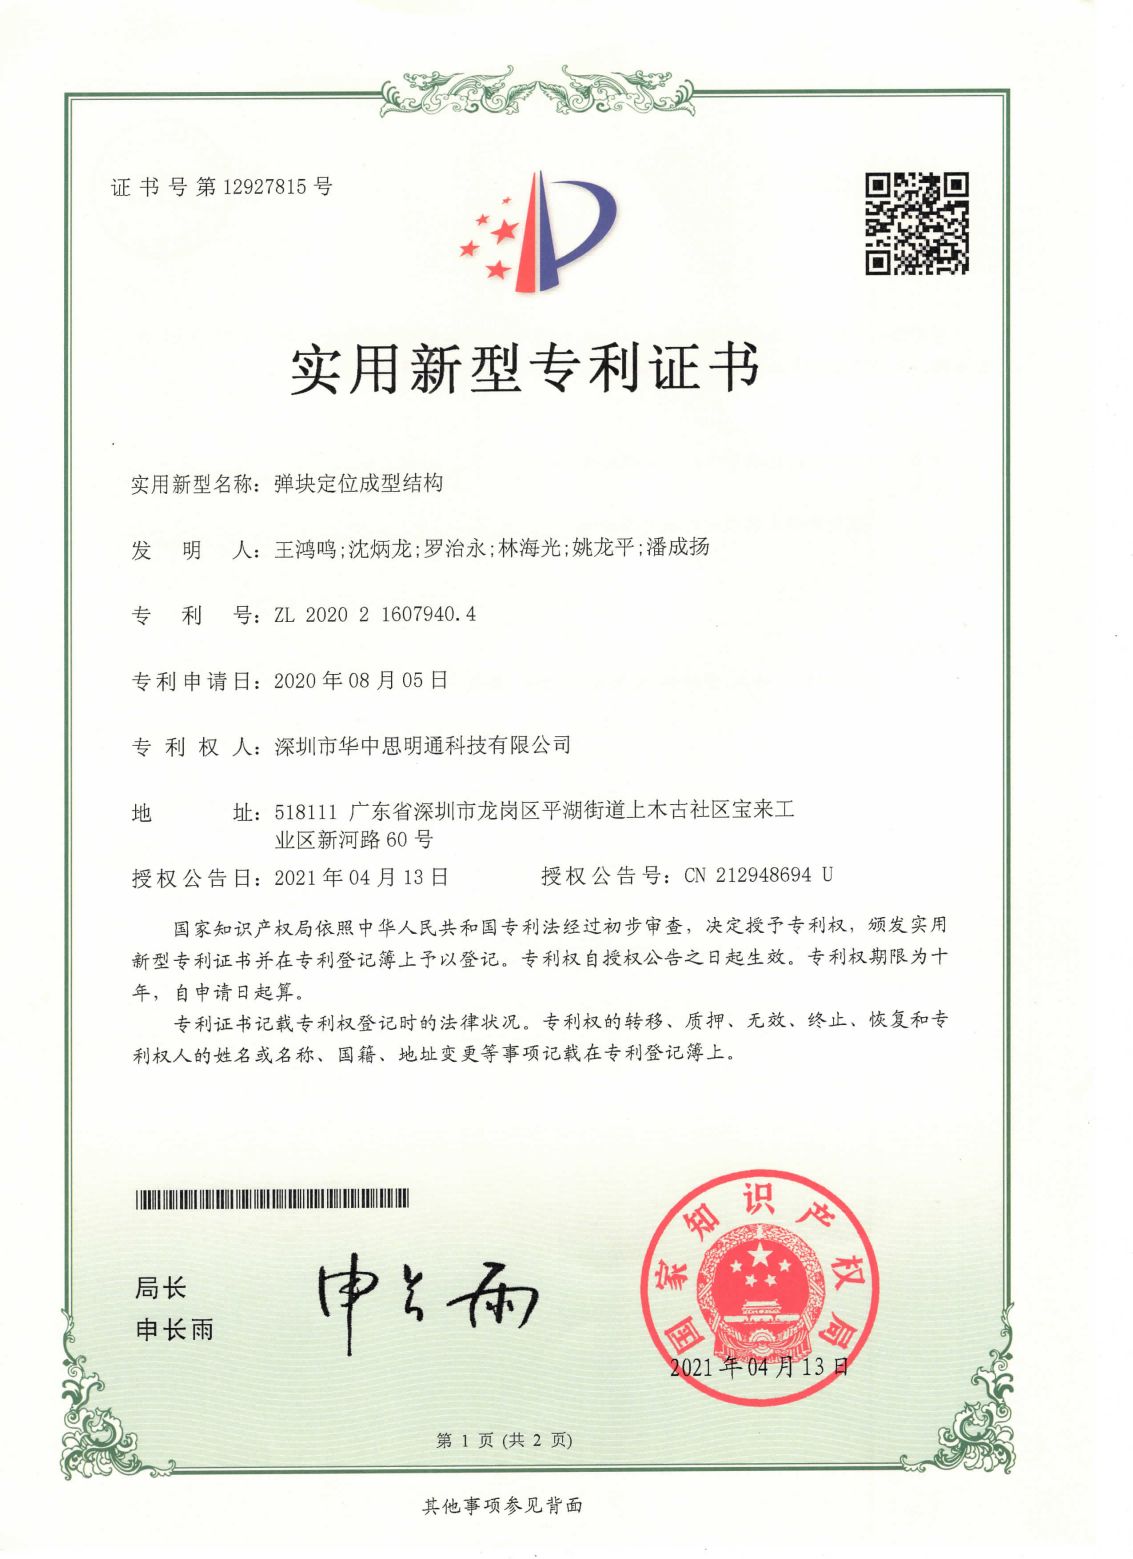 Utility model patent certificate - 05.1